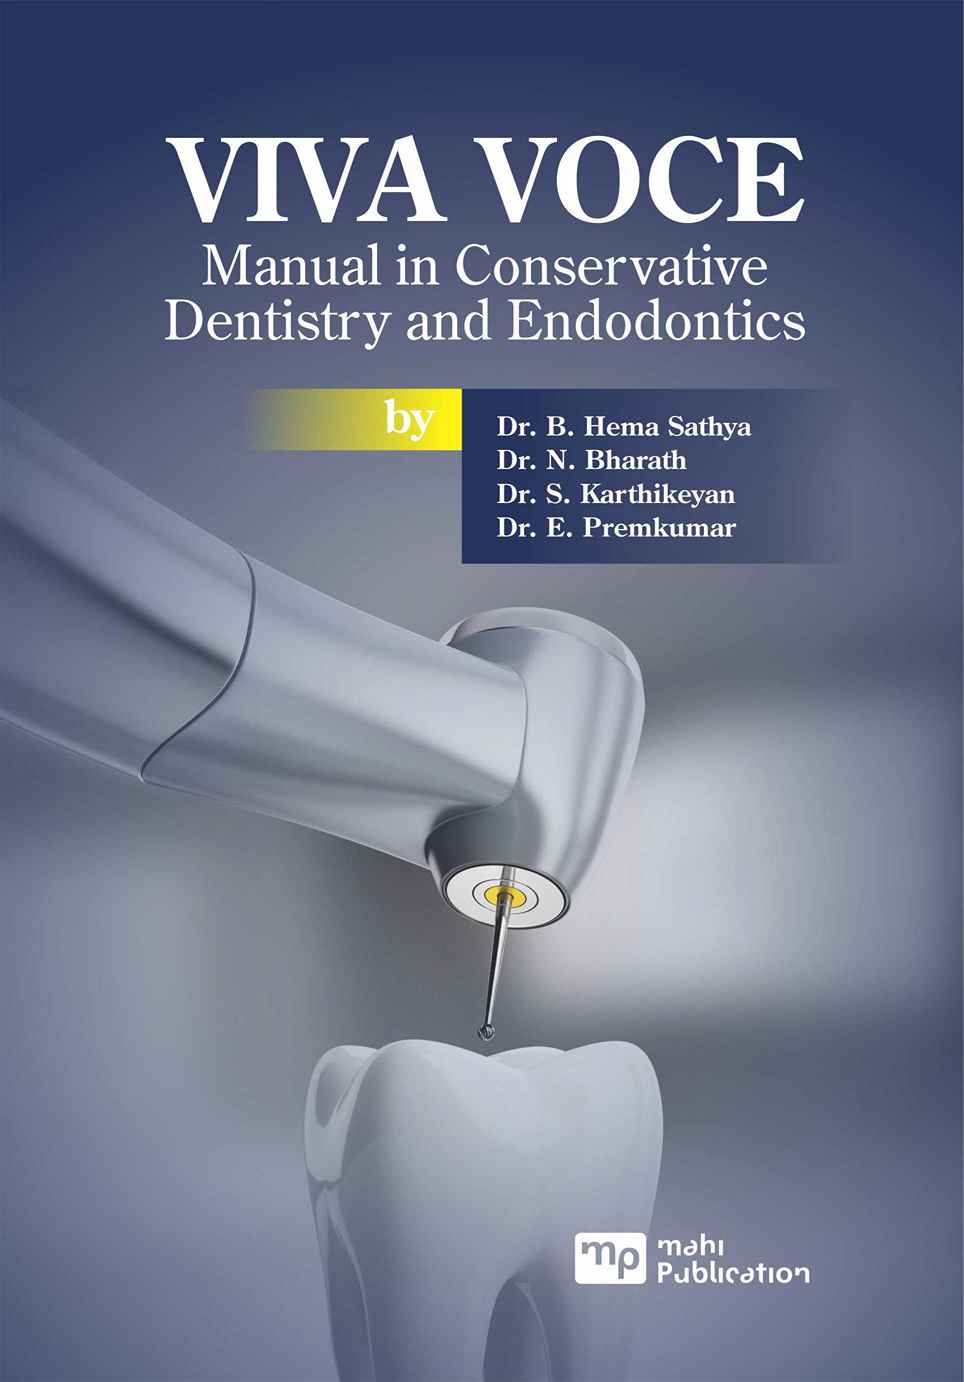 VIVA VOCE Manual in Conservative Dentistry and Endodontics